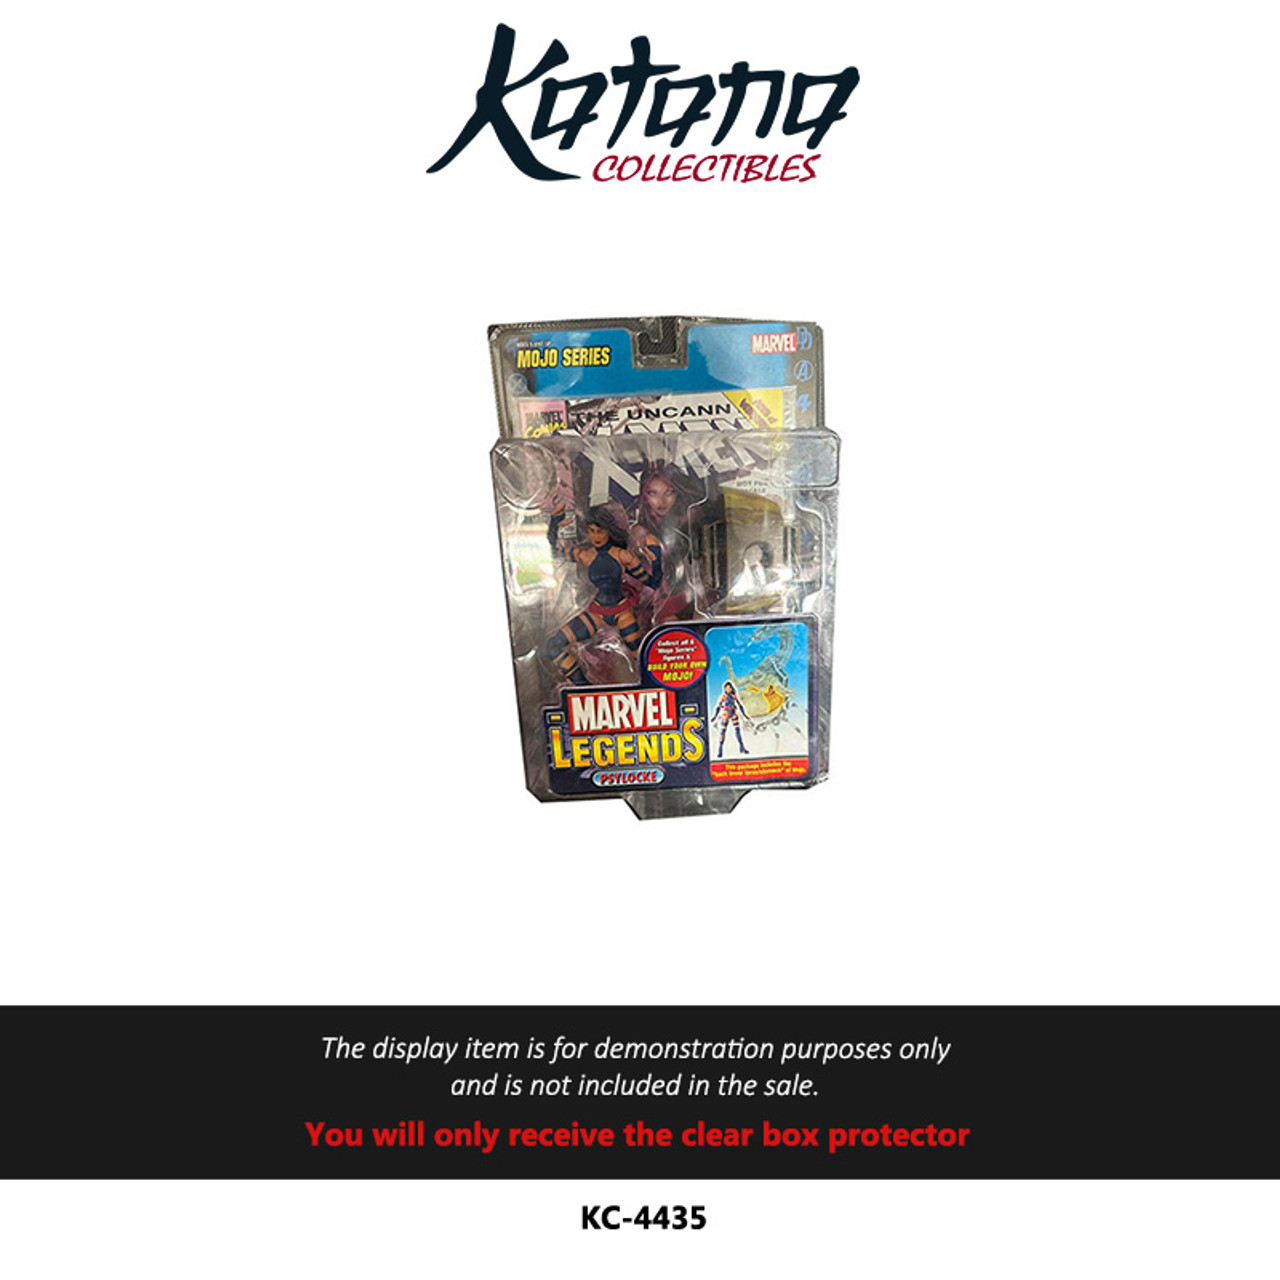 Katana Collectibles Protector For Marvel Legends Psylocke Mojo Series